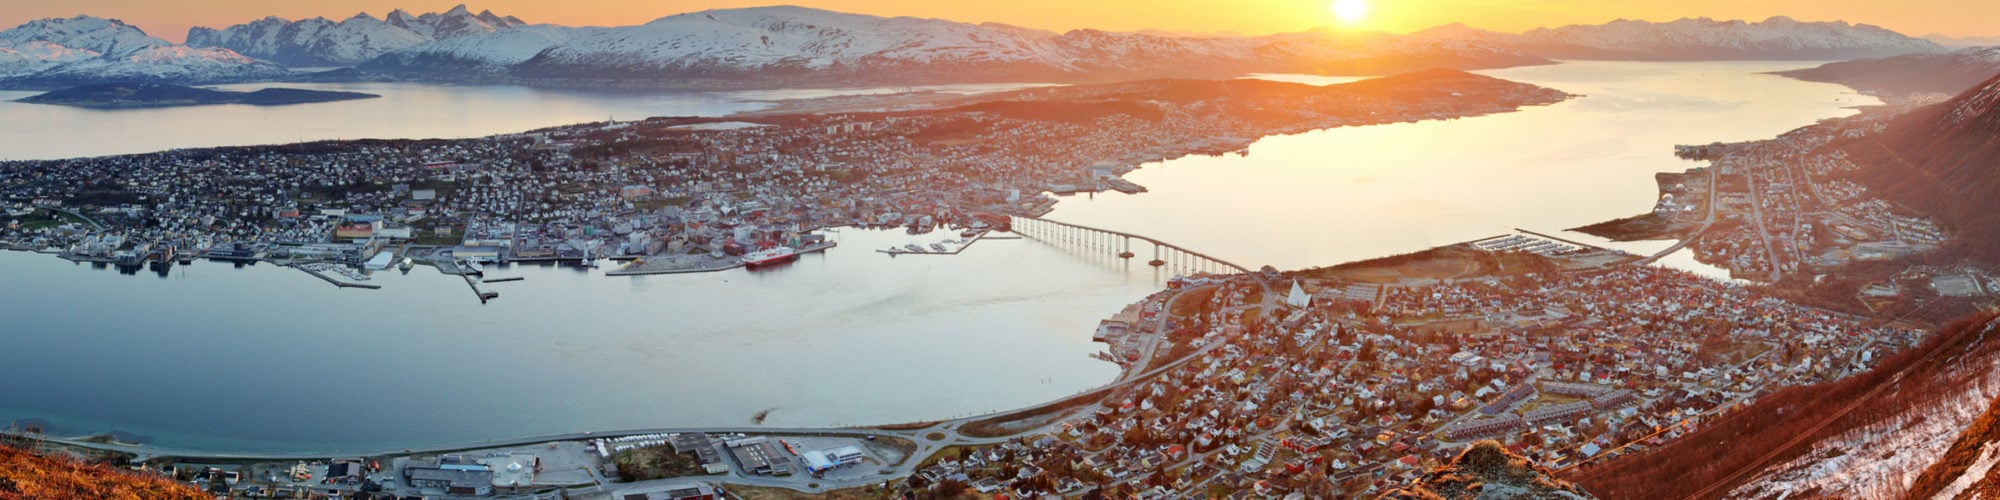 Tromso travel agents packages deals